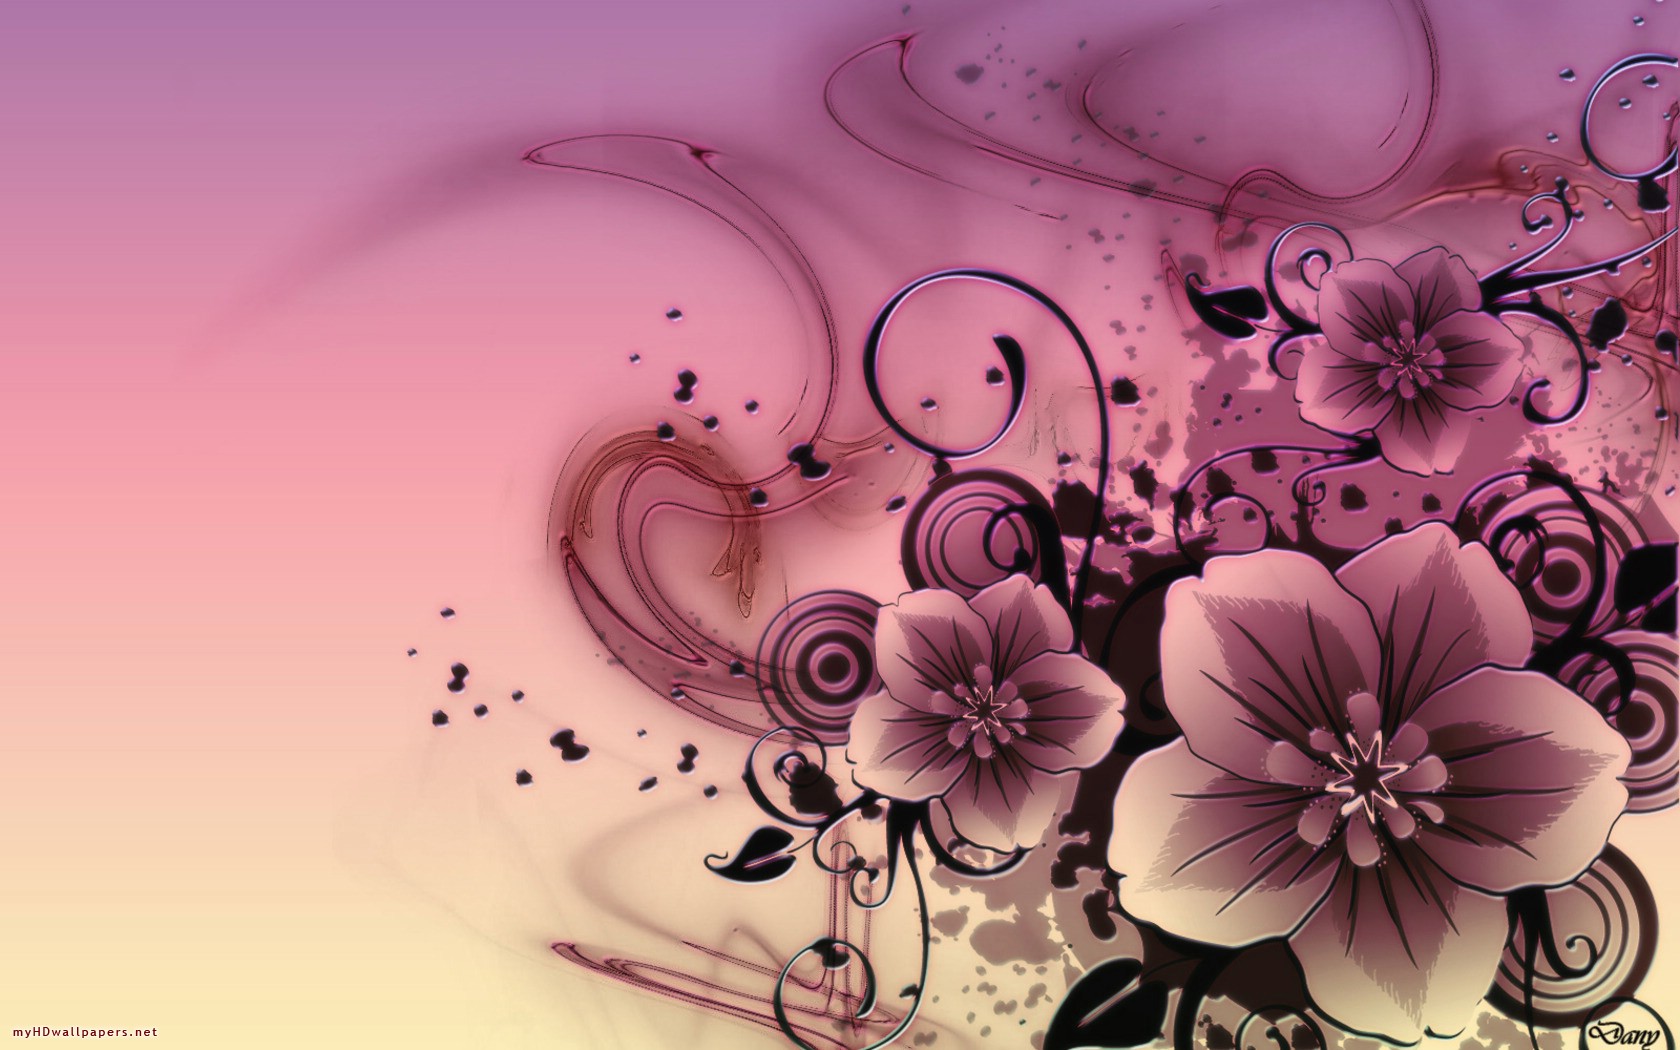 129,853 3d Floral Wallpaper Images, Stock Photos, 3D objects, & Vectors |  Shutterstock